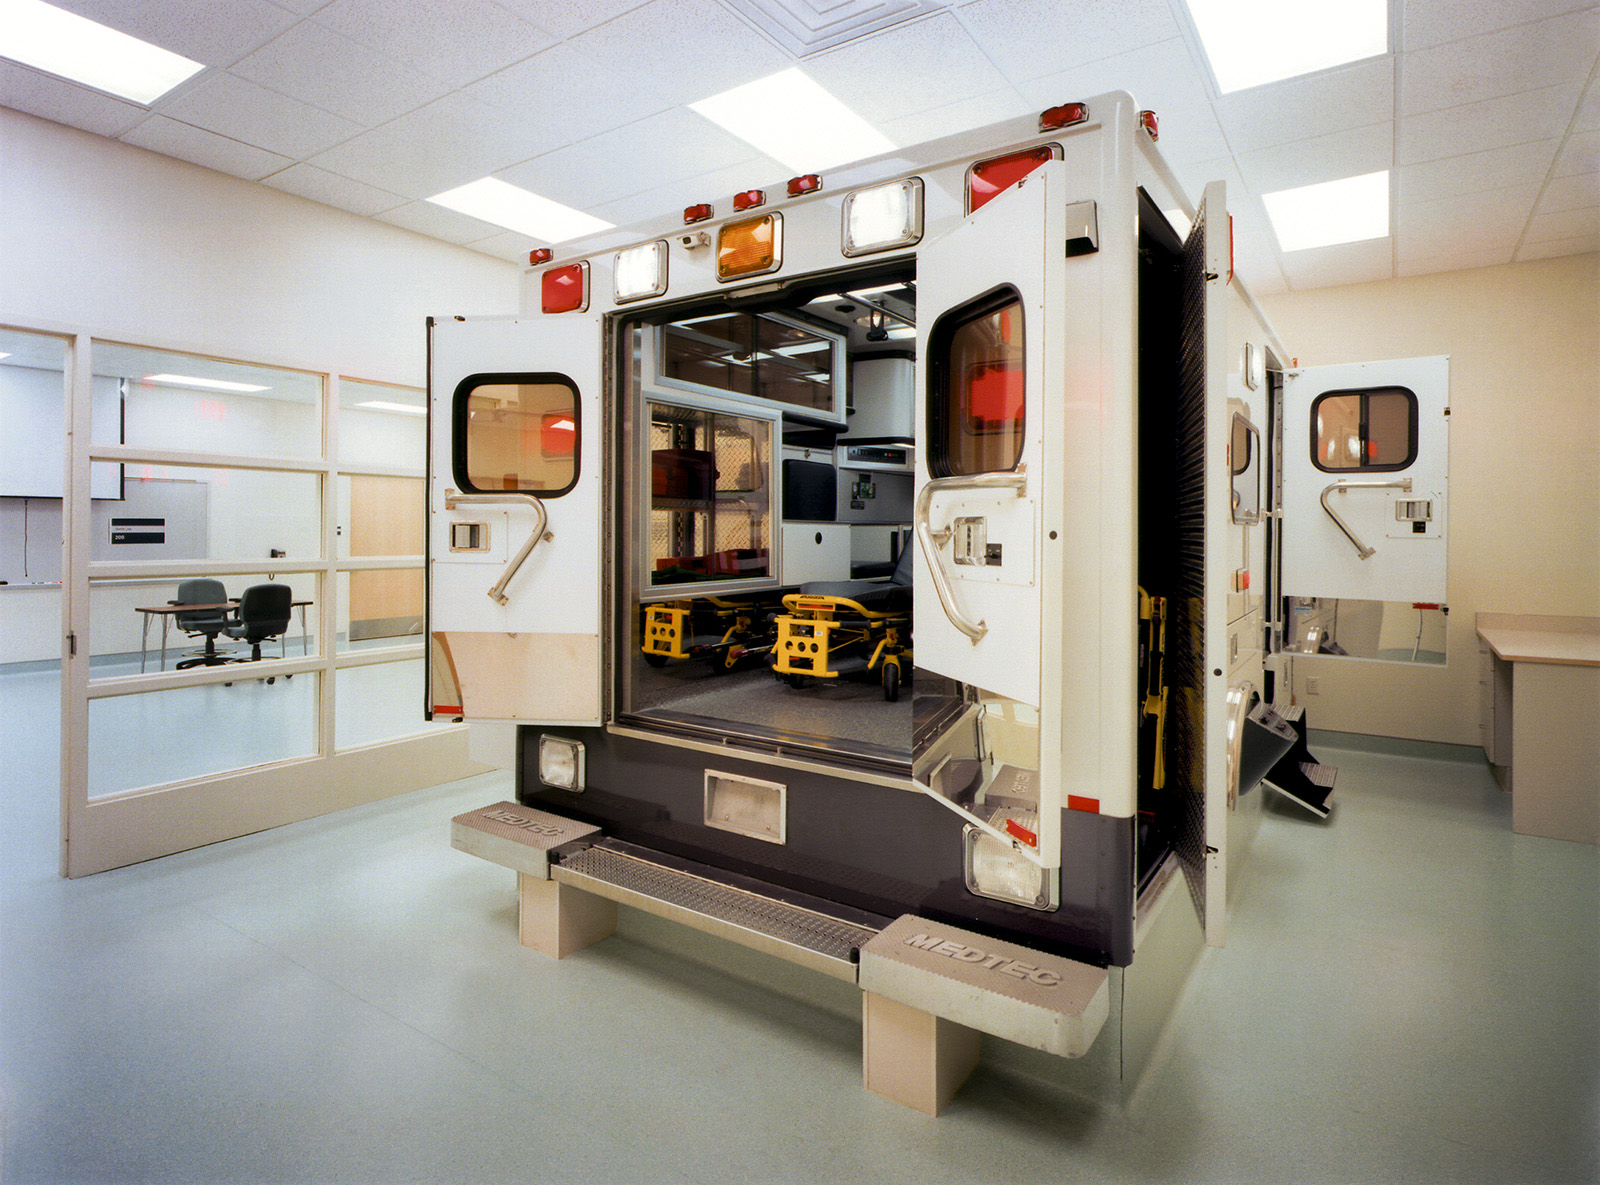 lcc-health-and-human-services-ambulance